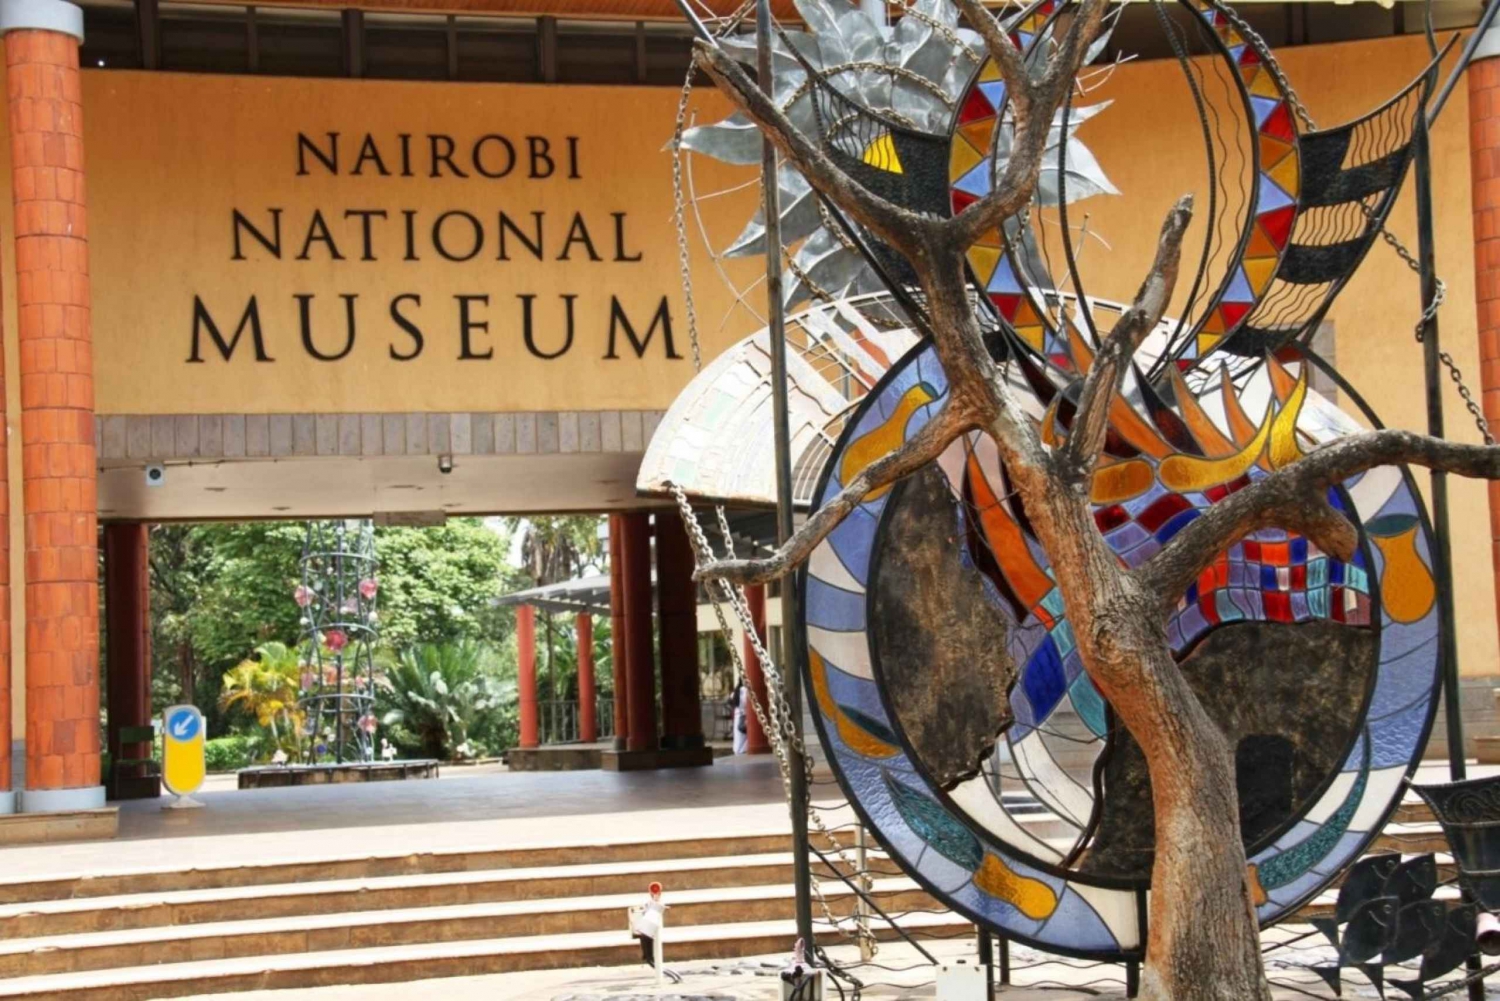 Layover i Nairobi lufthavn: Rundvisning på Nairobis nationalmuseum